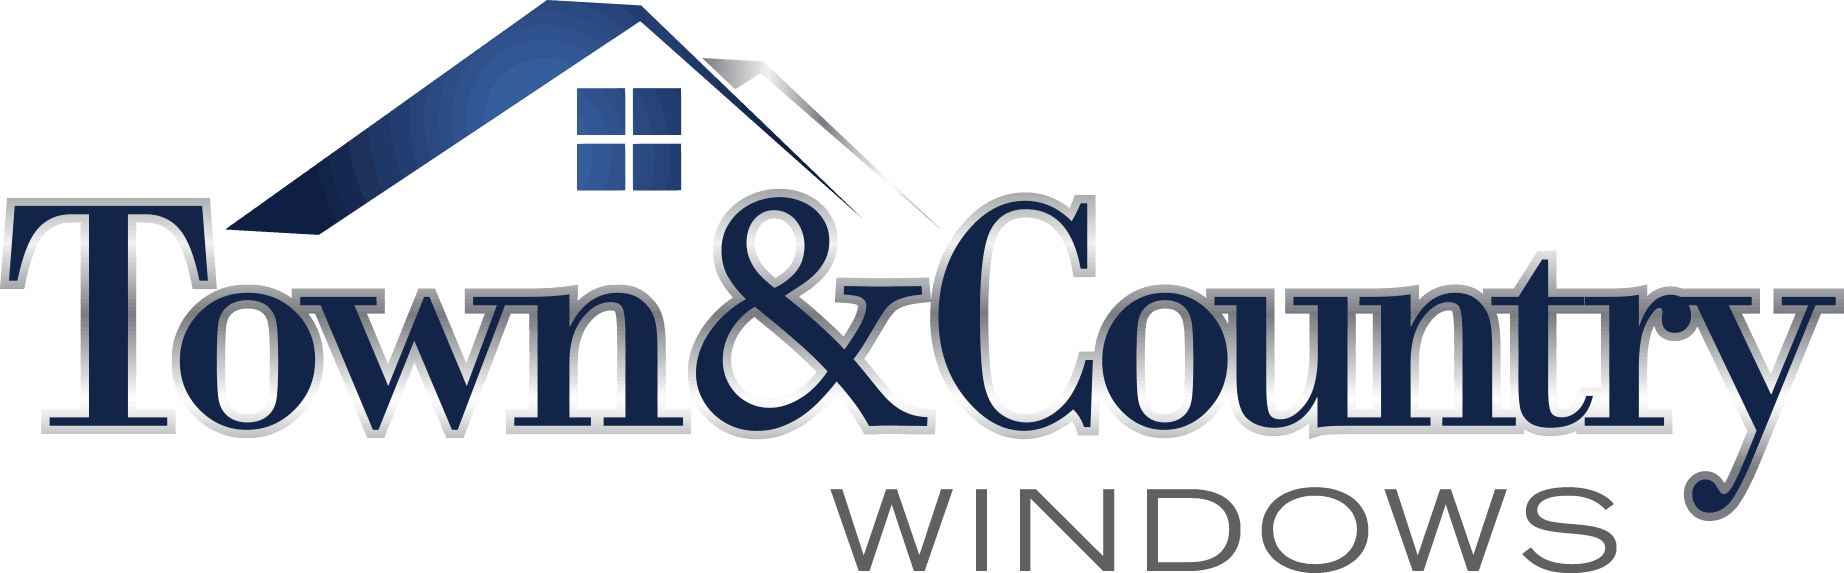 House Window Logo - 1 Home Windows Frisco TX - Home Window Replacement, Repair ...